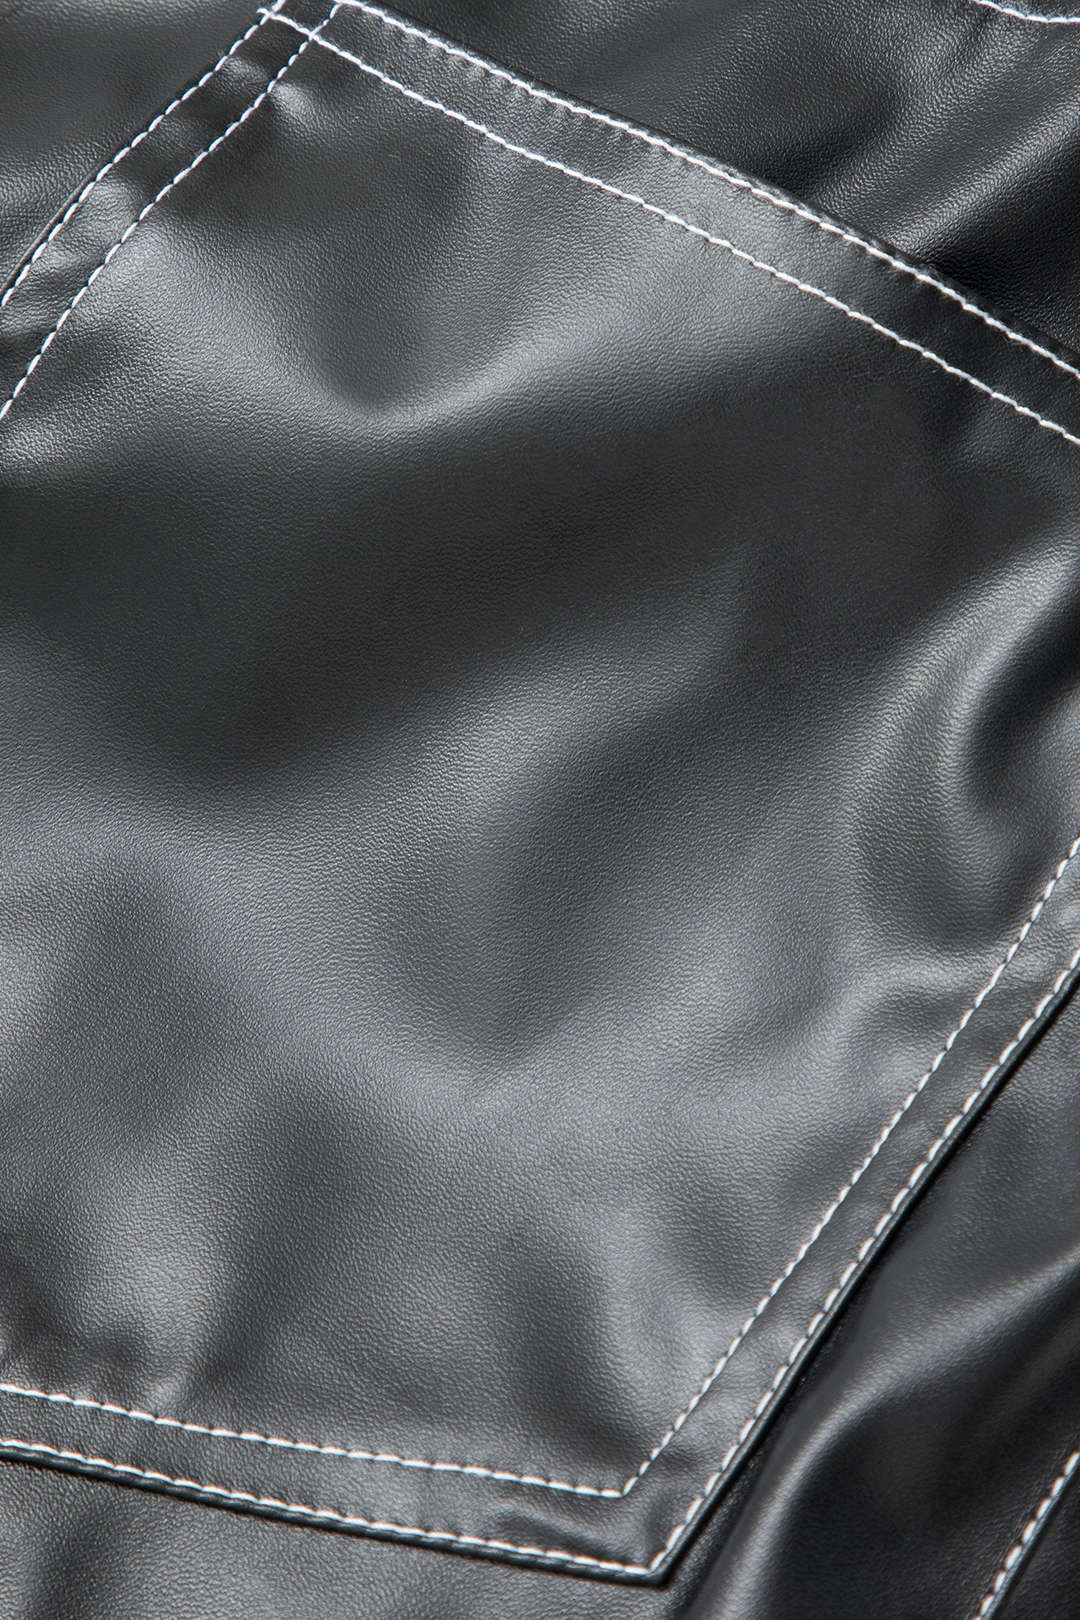 Stitching Detail Faux Leather Split Maxi Skirt